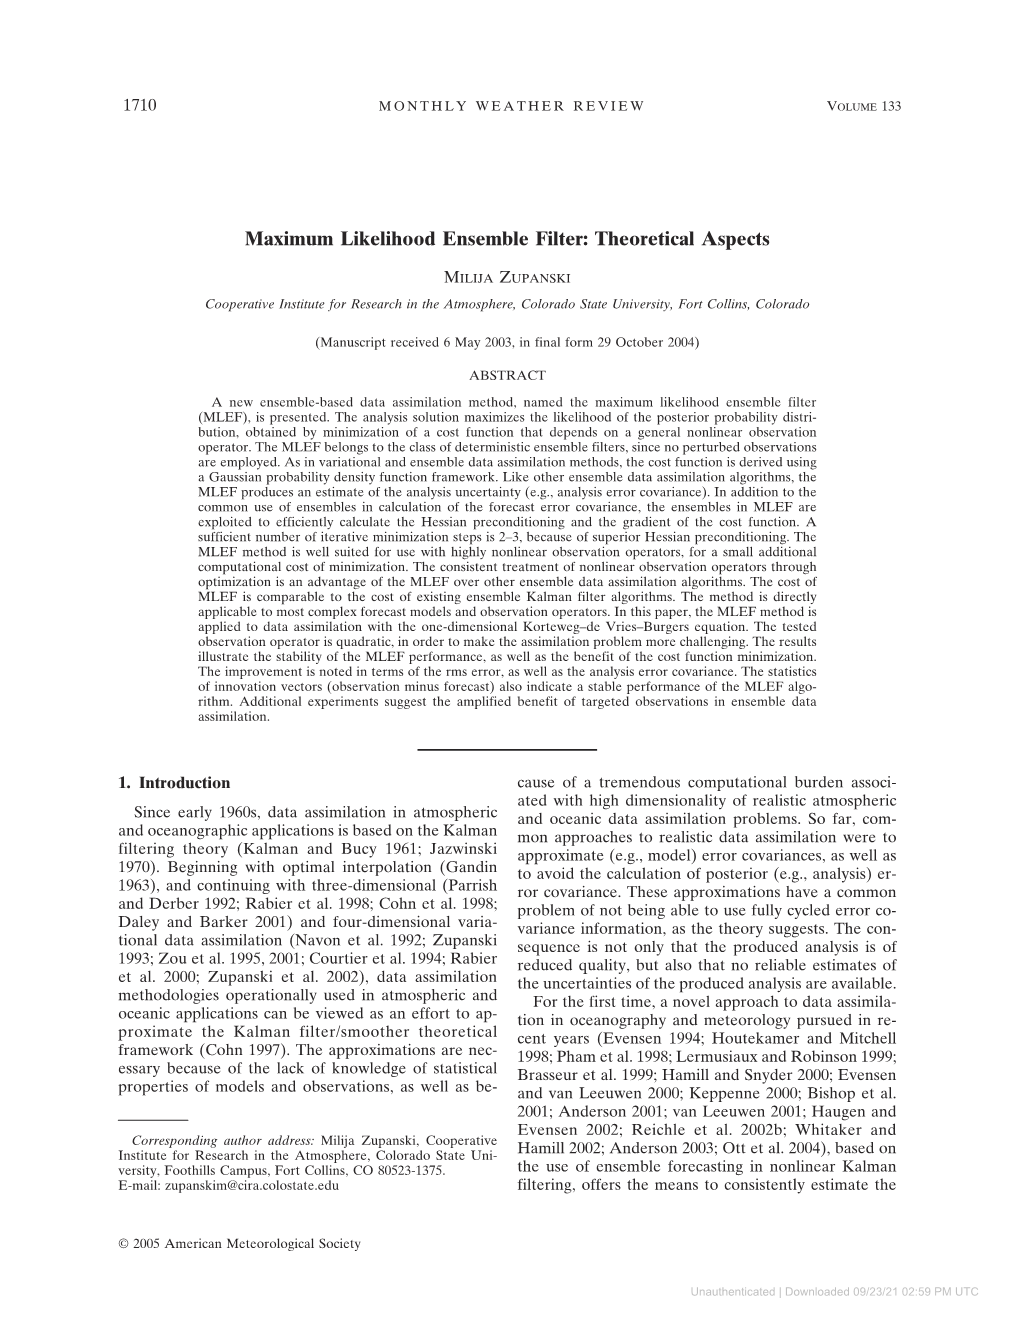 Maximum Likelihood Ensemble Filter: Theoretical Aspects